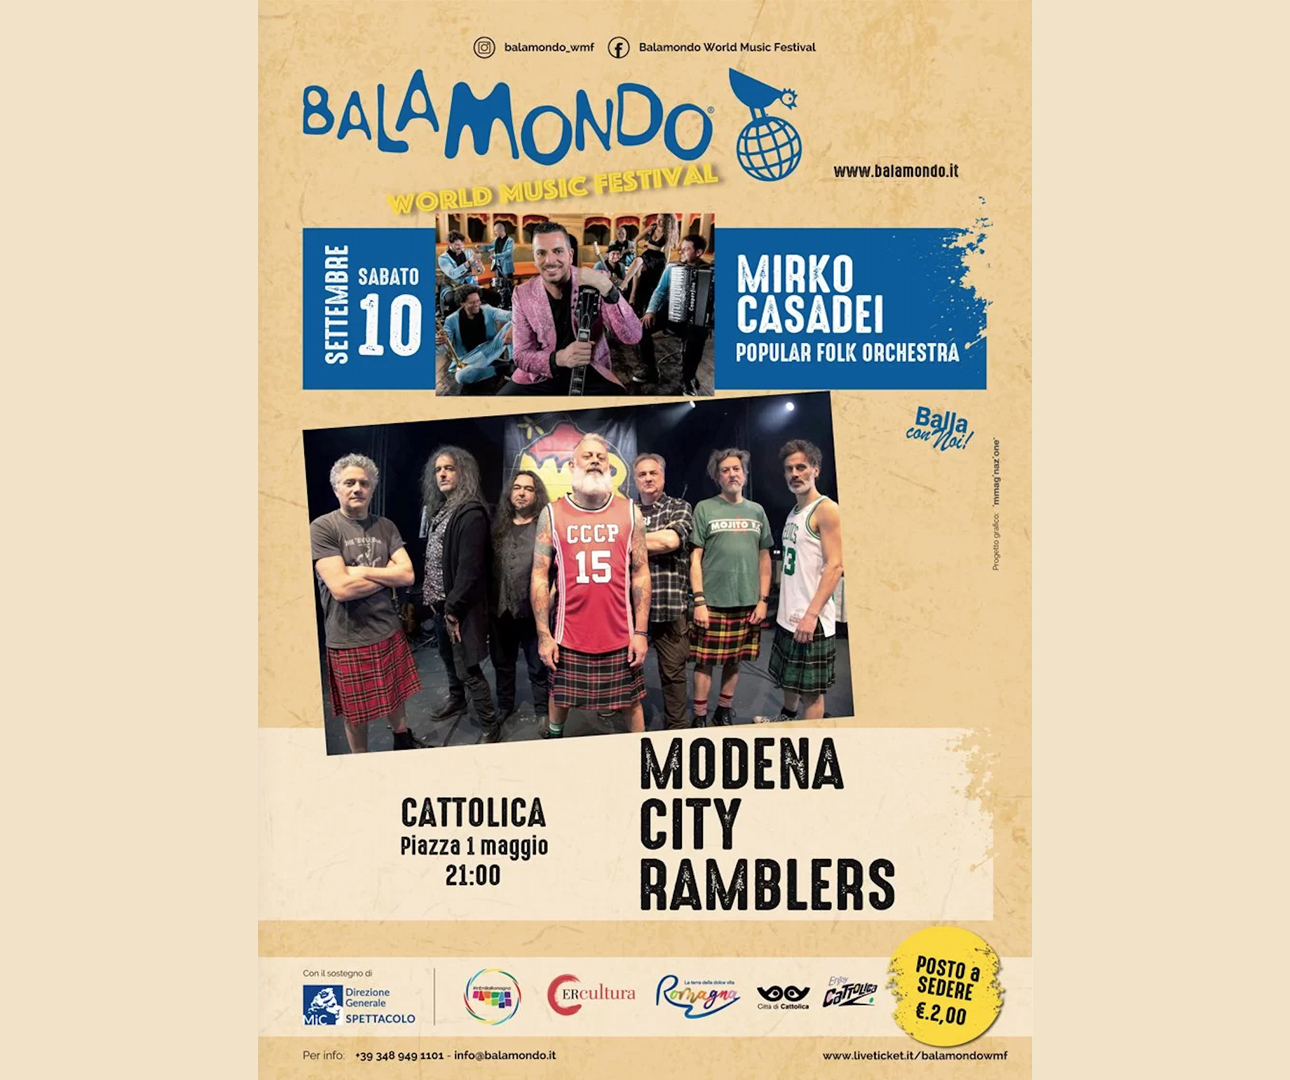 Balamondo World Music Festival